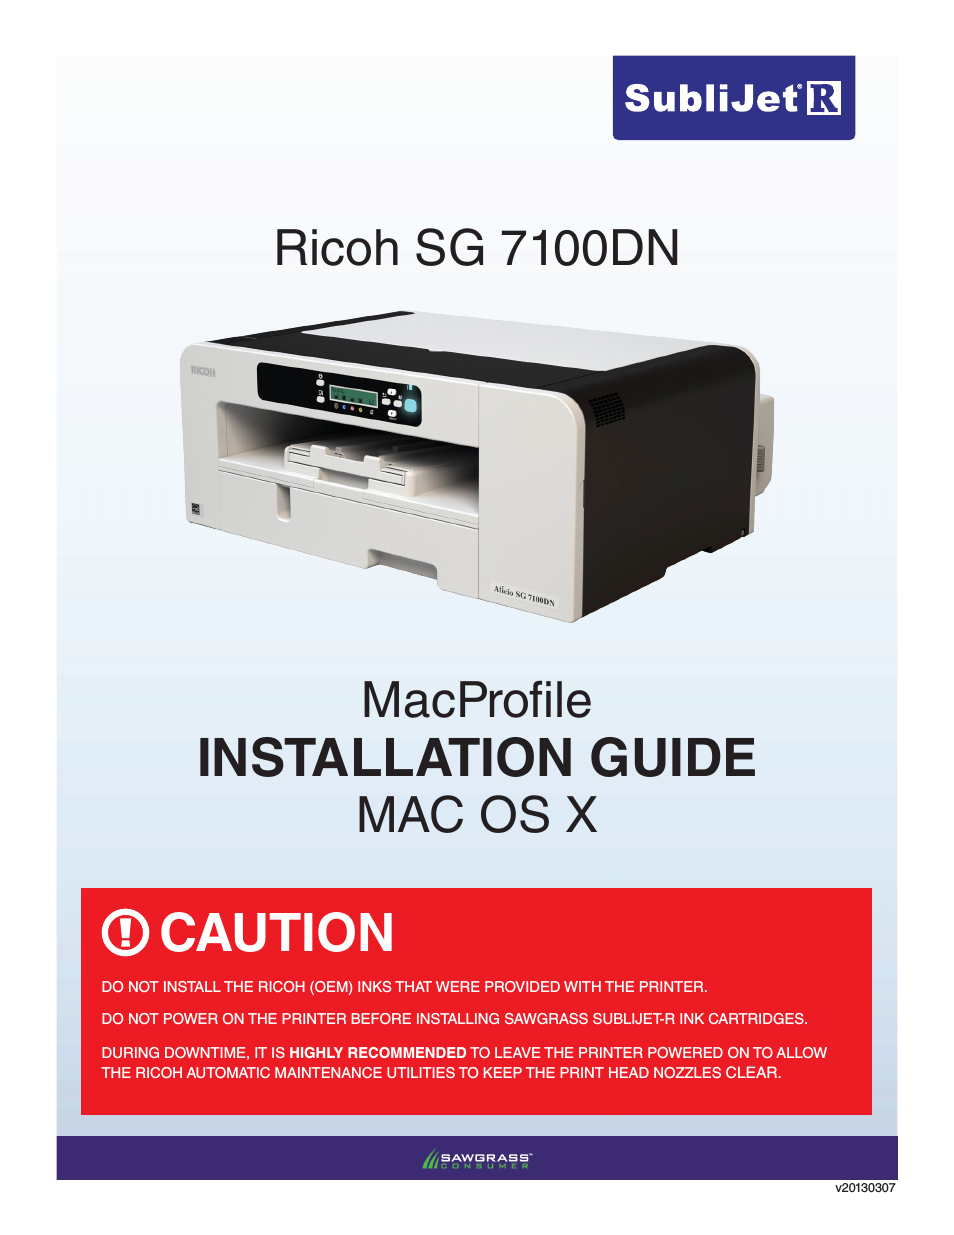 SubliJet R Ricoh SG7100DN (Mac ICC Profile Setup): Printer/Profile Installation Guide